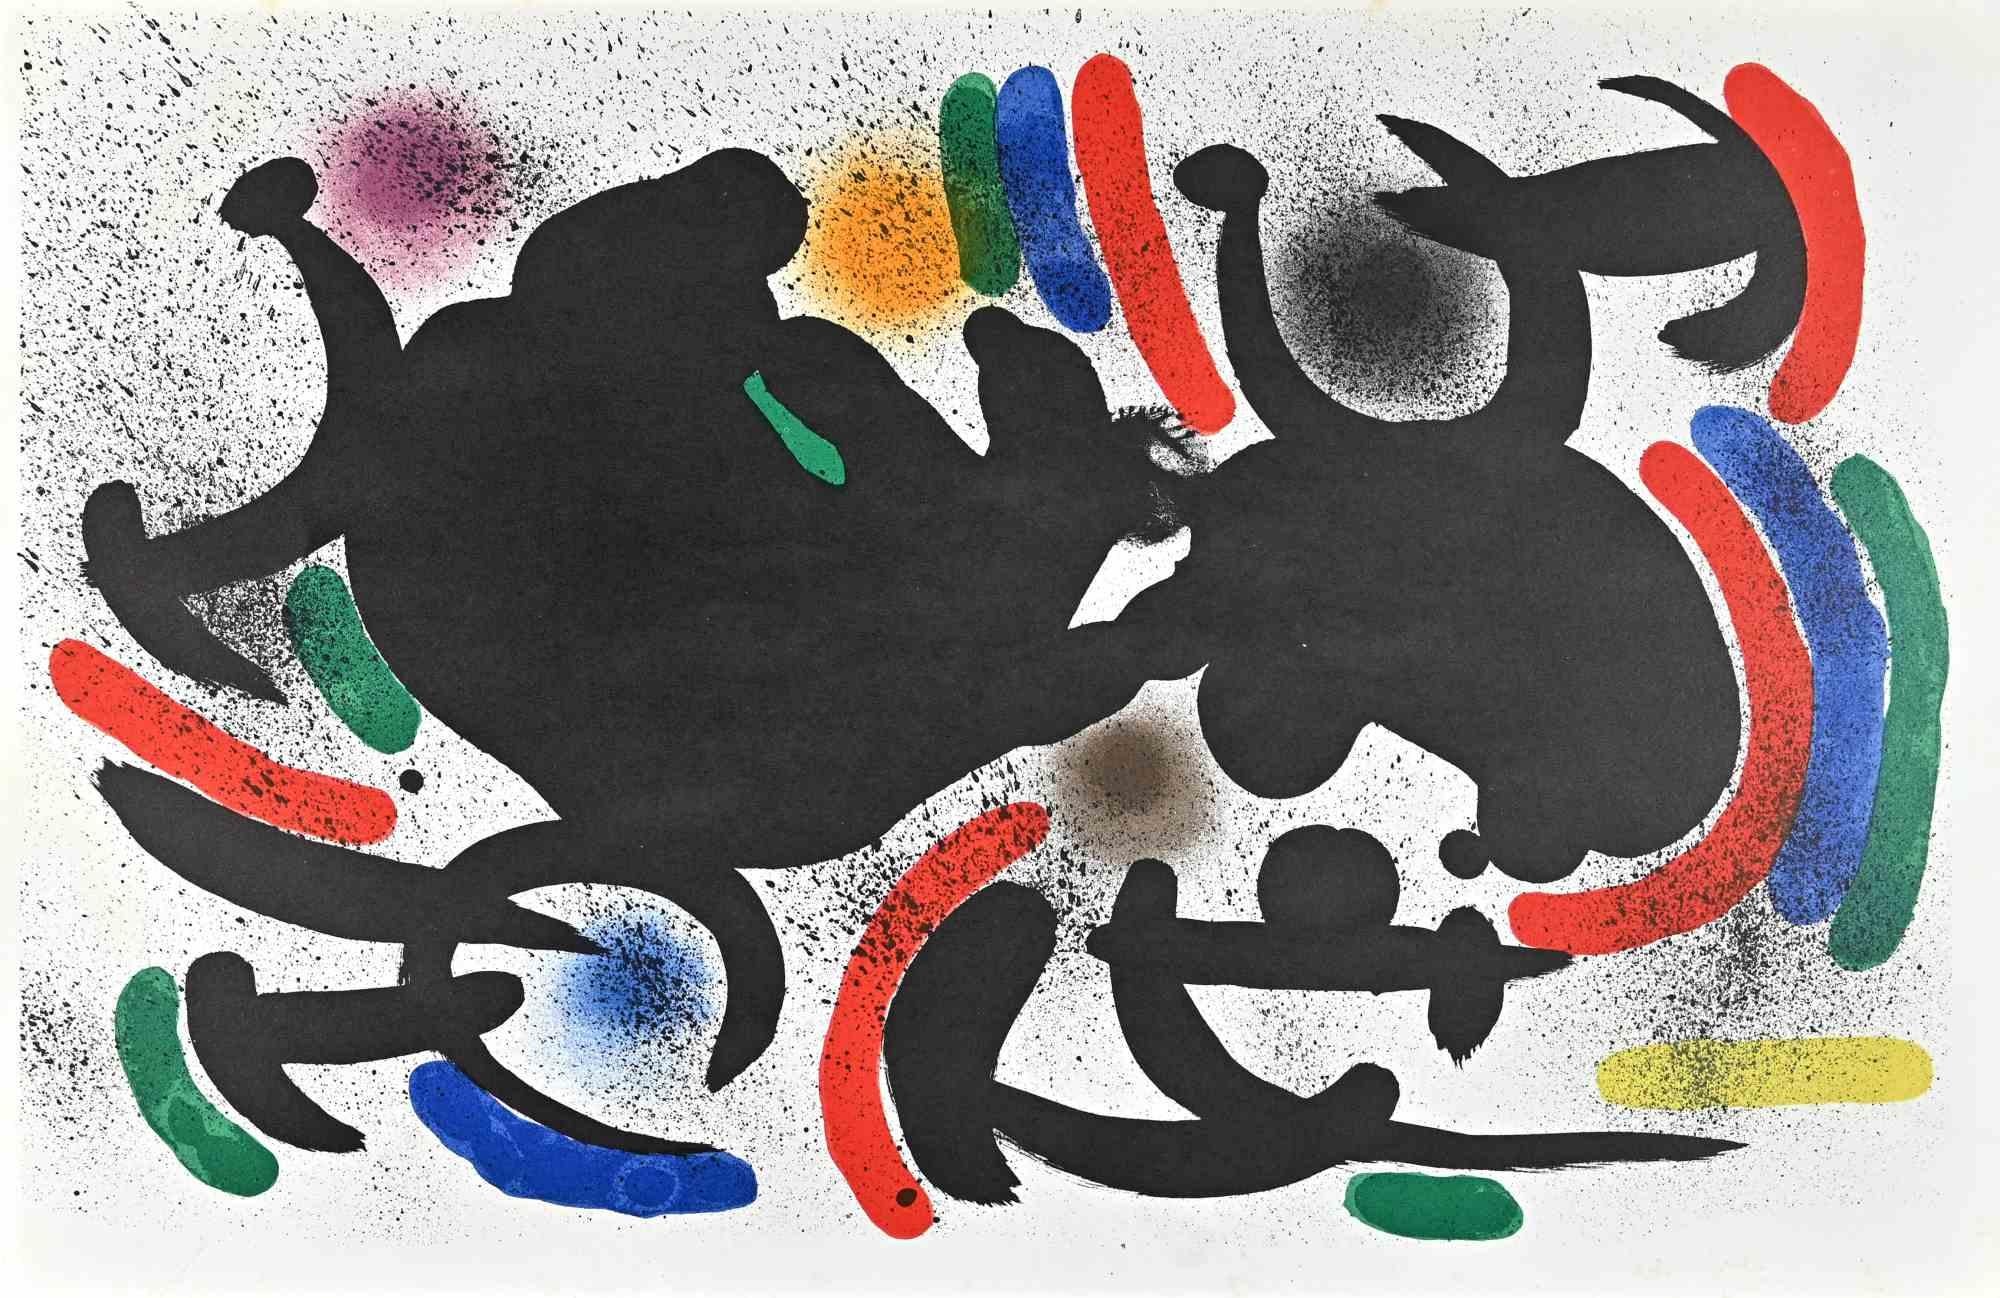 Abstract Print Joan Miró - Lithographie Miró I - Planche VII - Lithographie de Joan Mirò - 1972